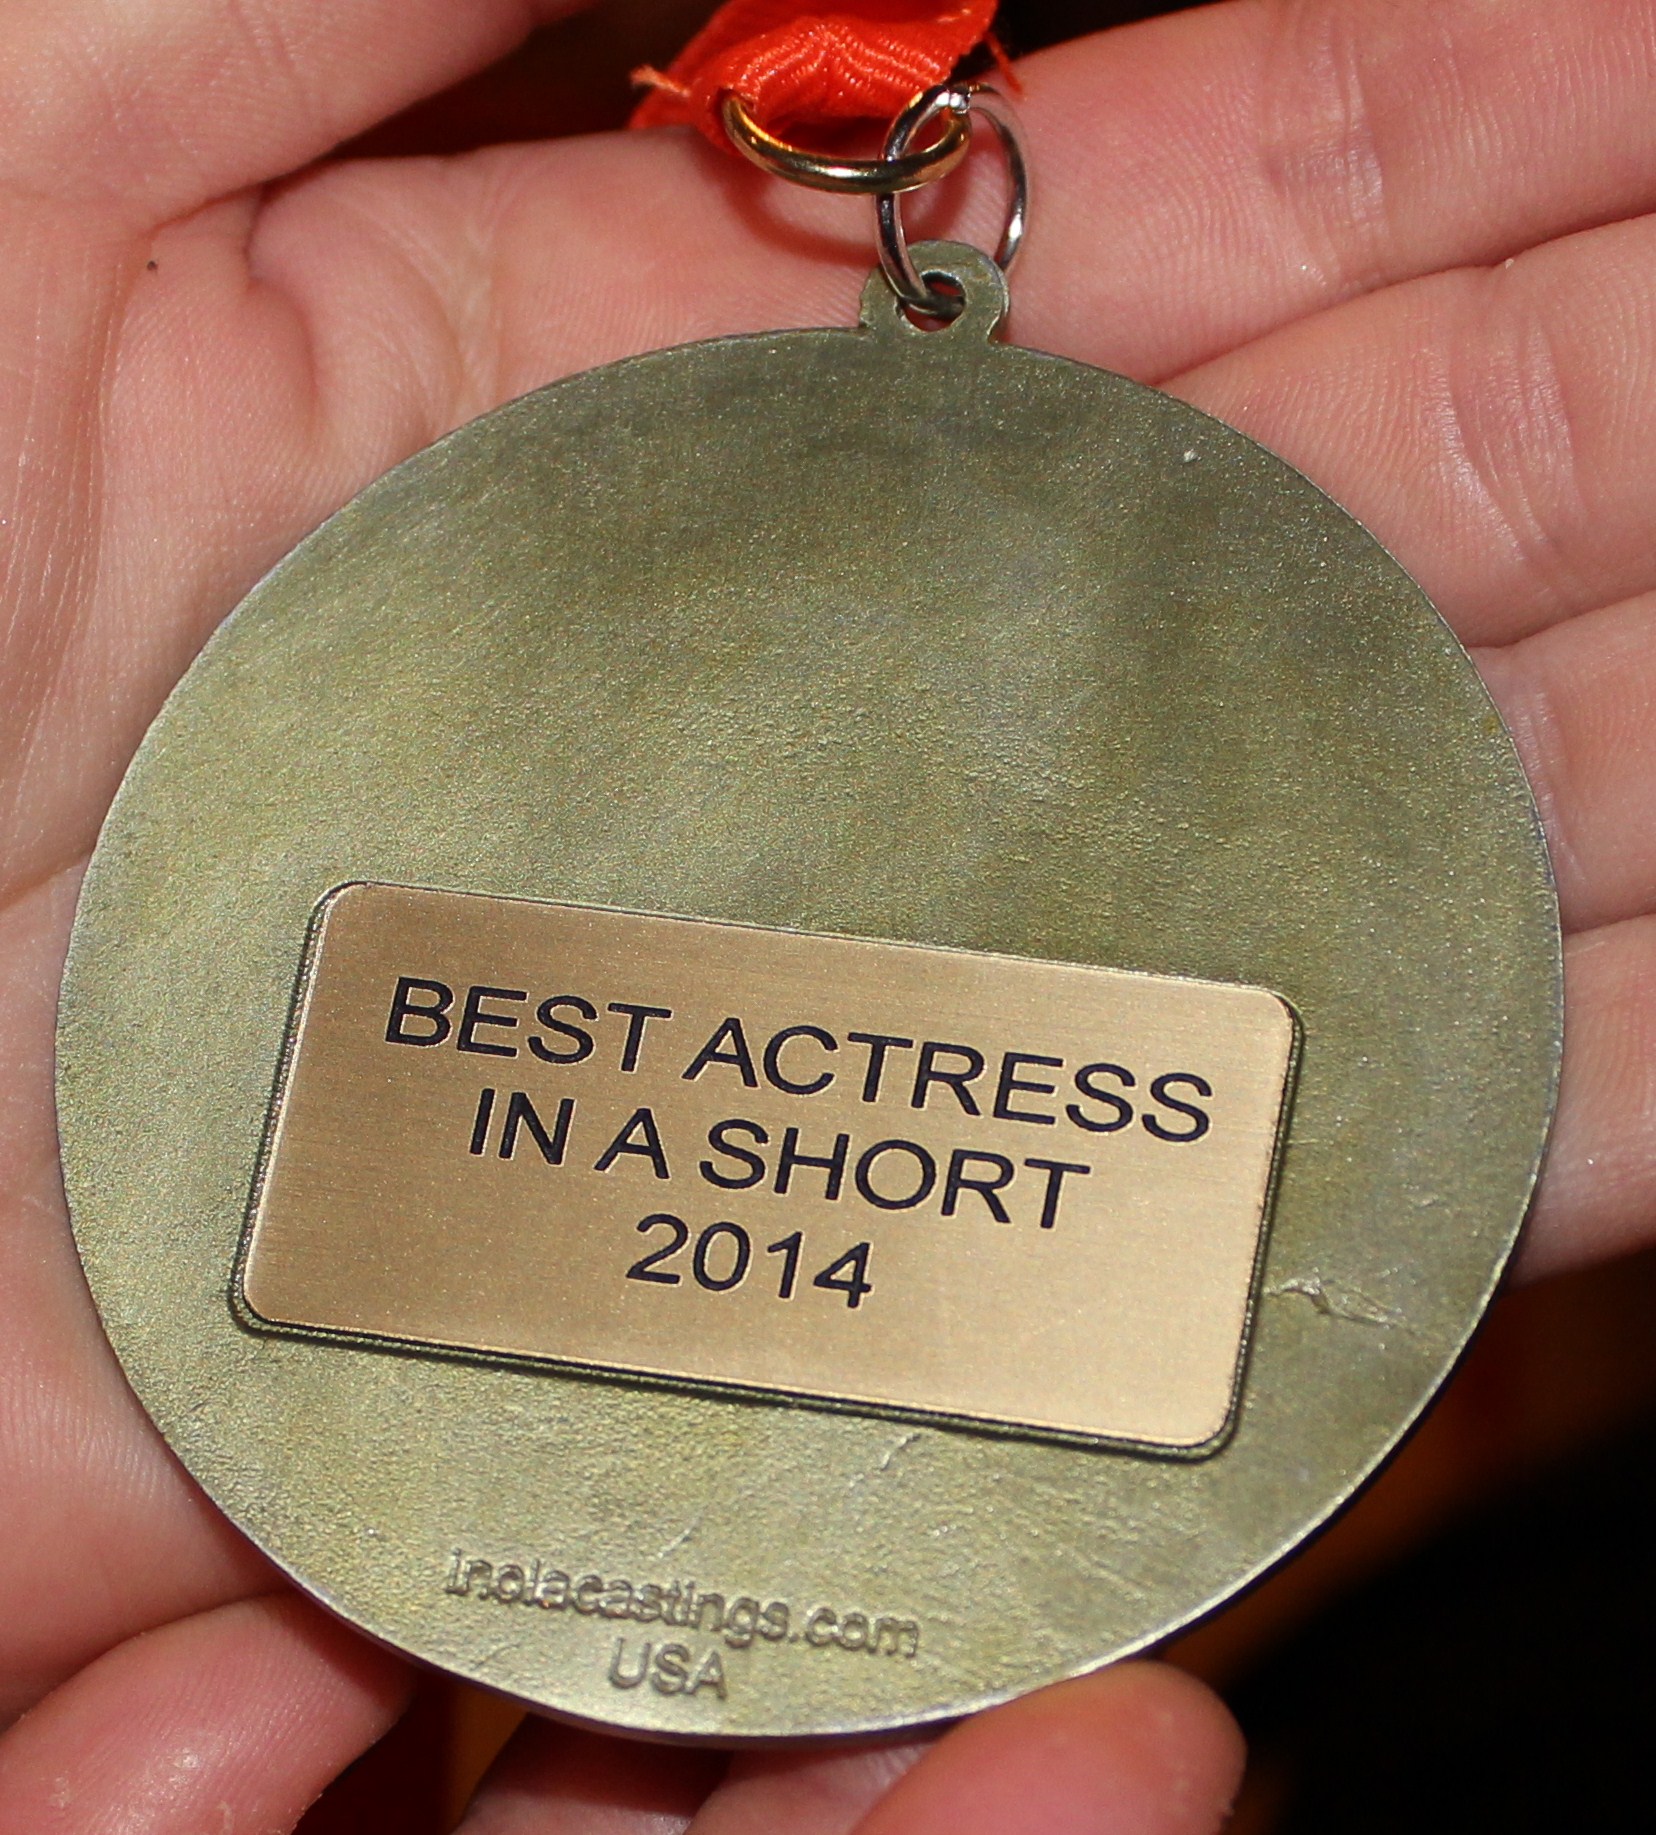 Rheagan wins 'Best Actress in a Short' for Amazin' Grace at the Bare Bones International Film Festival 2014